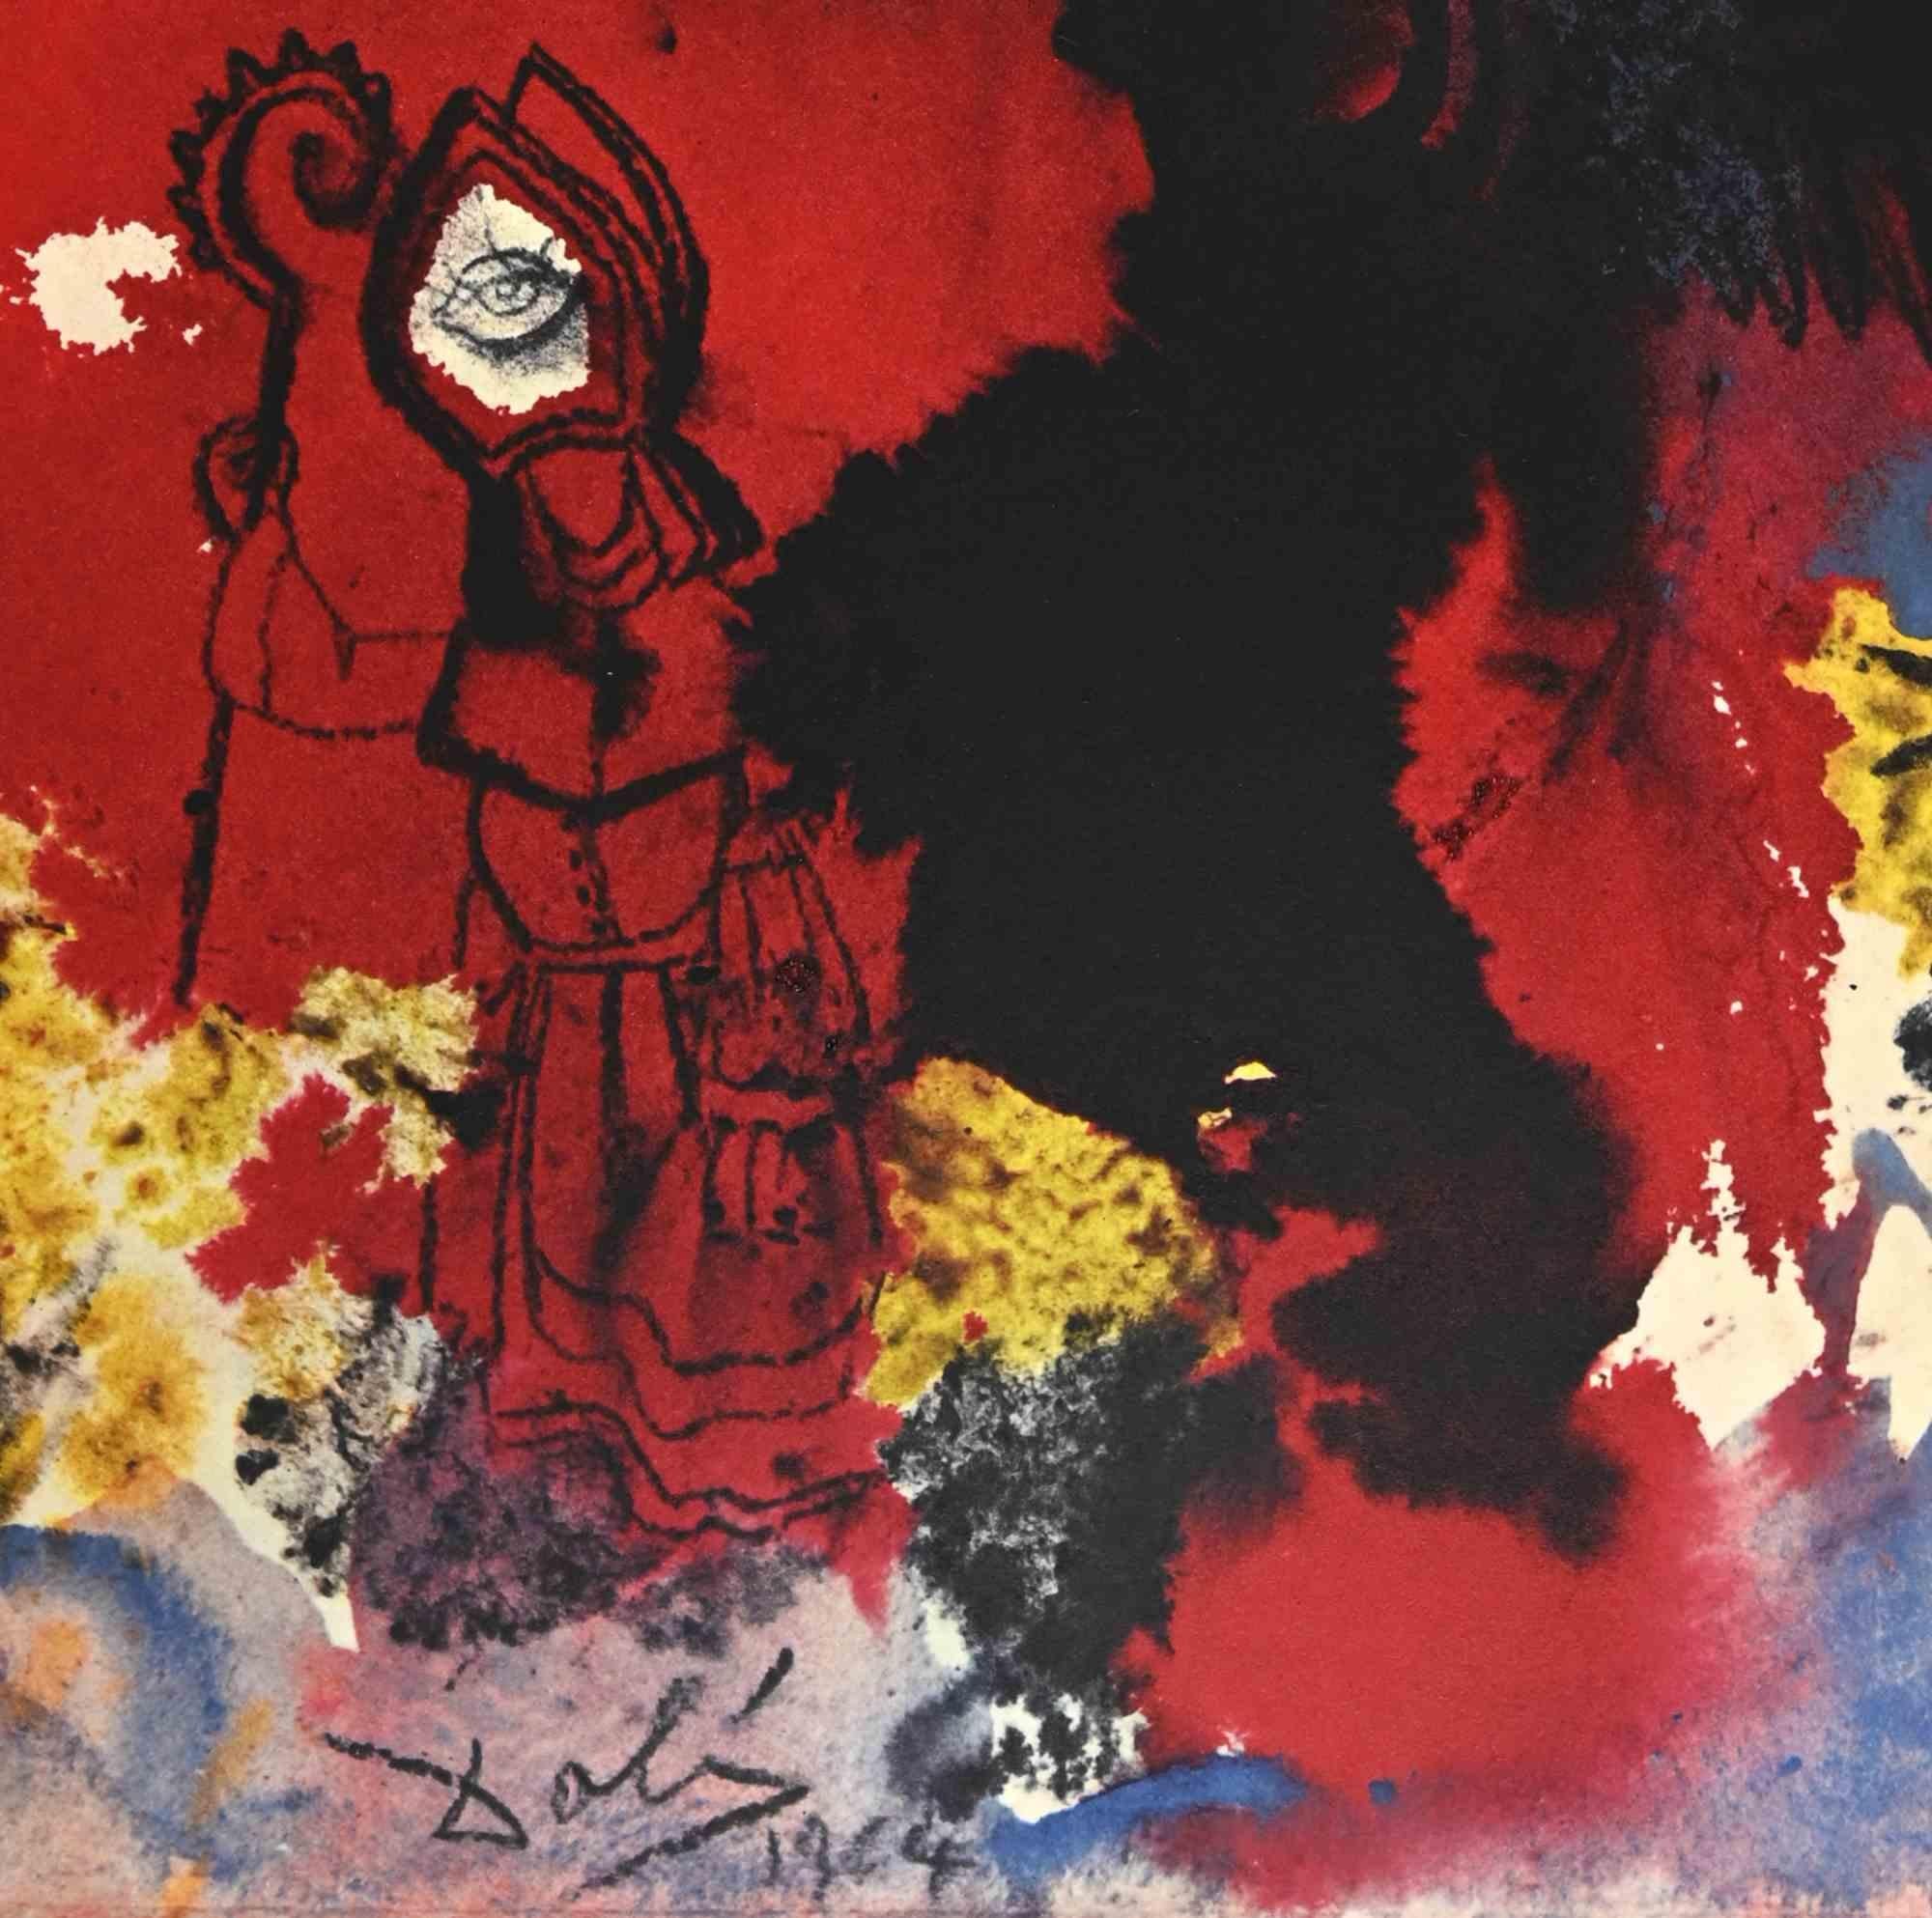 Iesus a Satana Tentatur - Lithography - 1964 - Print by Salvador Dalí